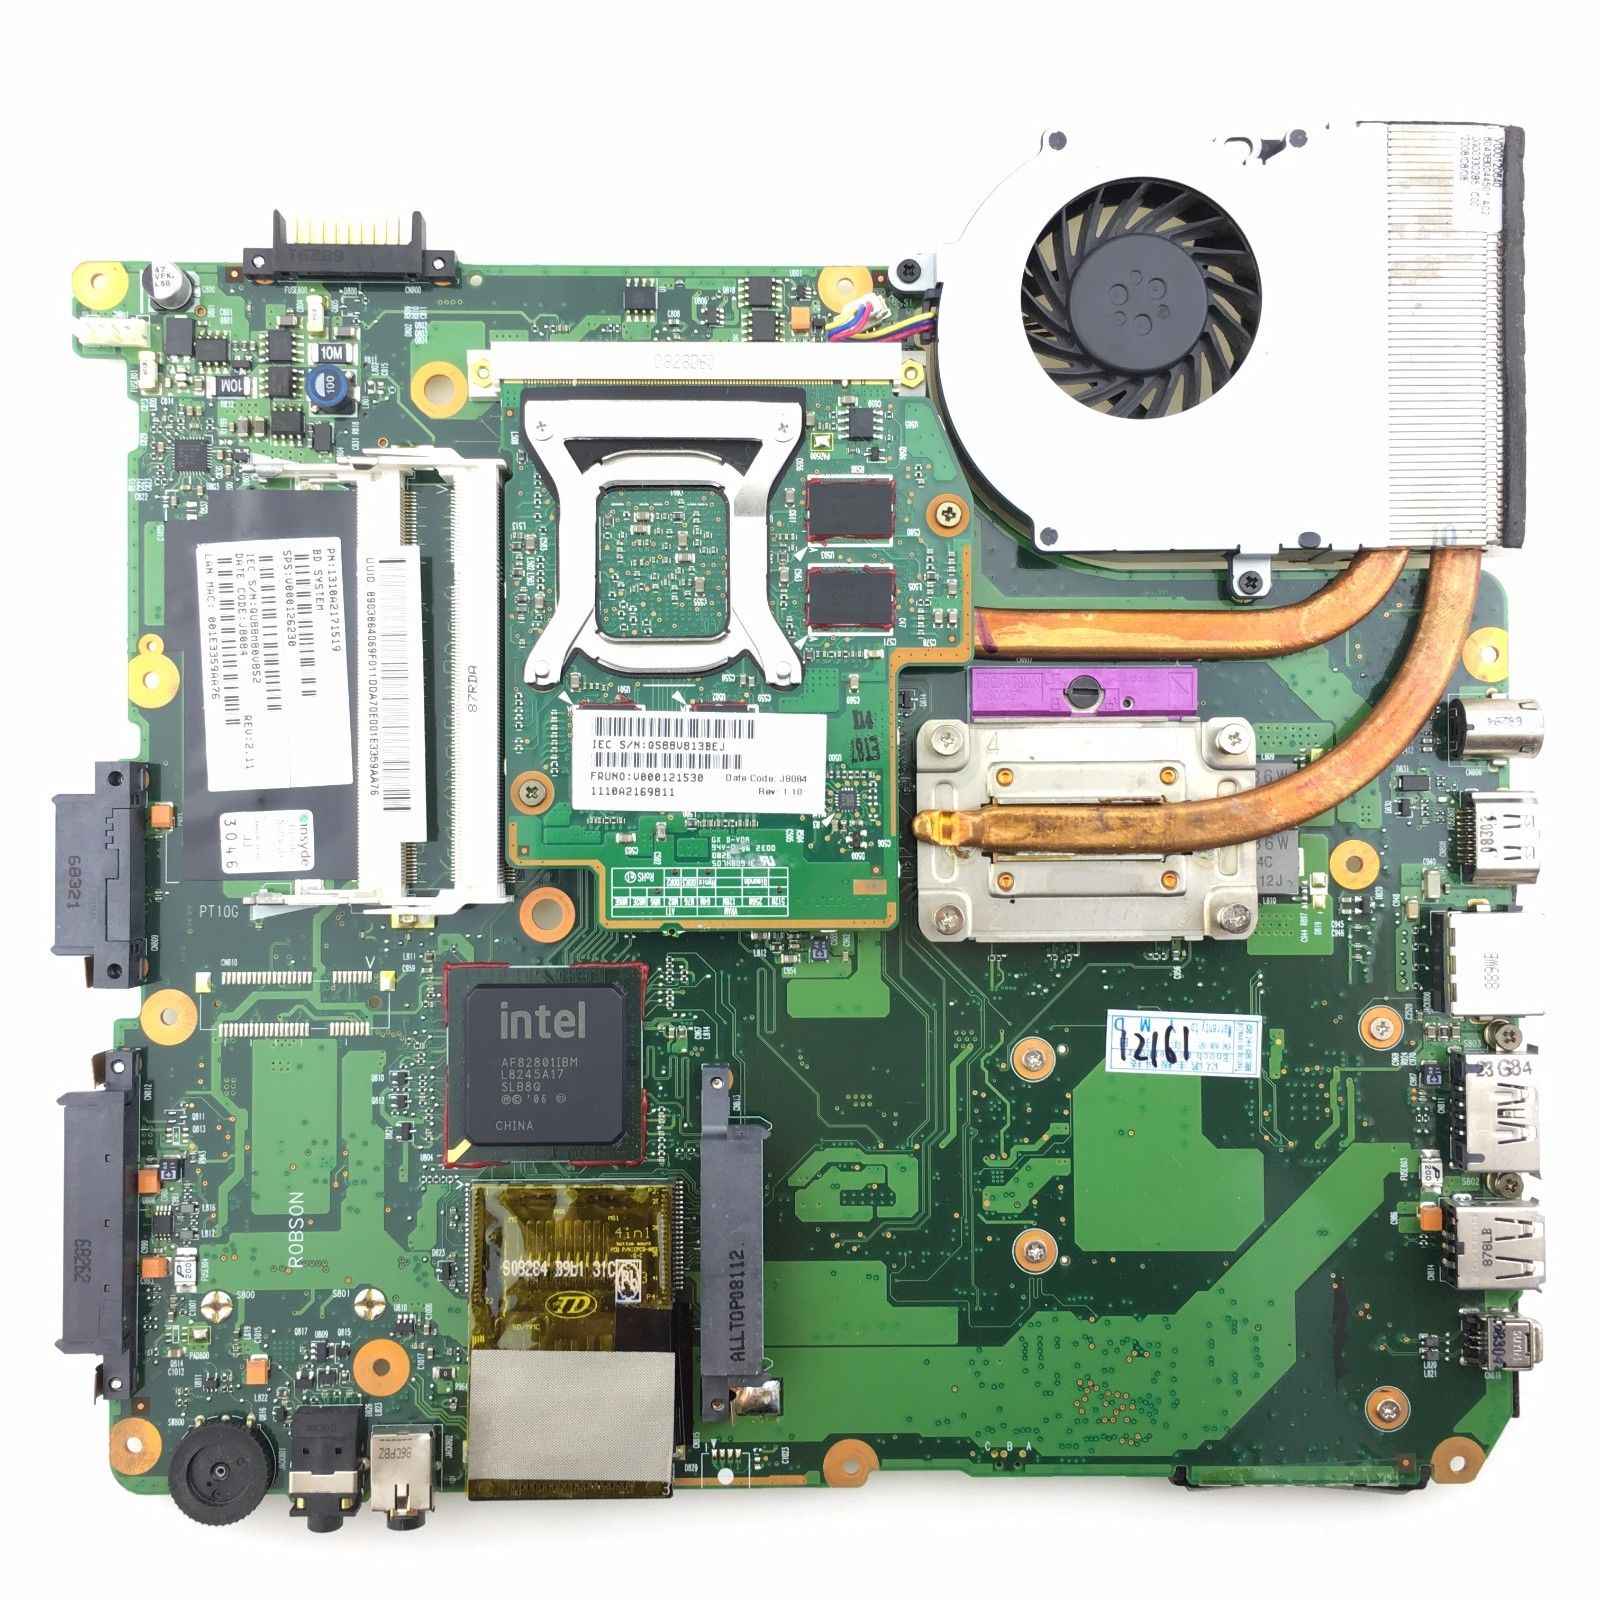 V000126230 Toshiba Satellite A300 A305 Motherboard Heatsink/video card SATA DVD